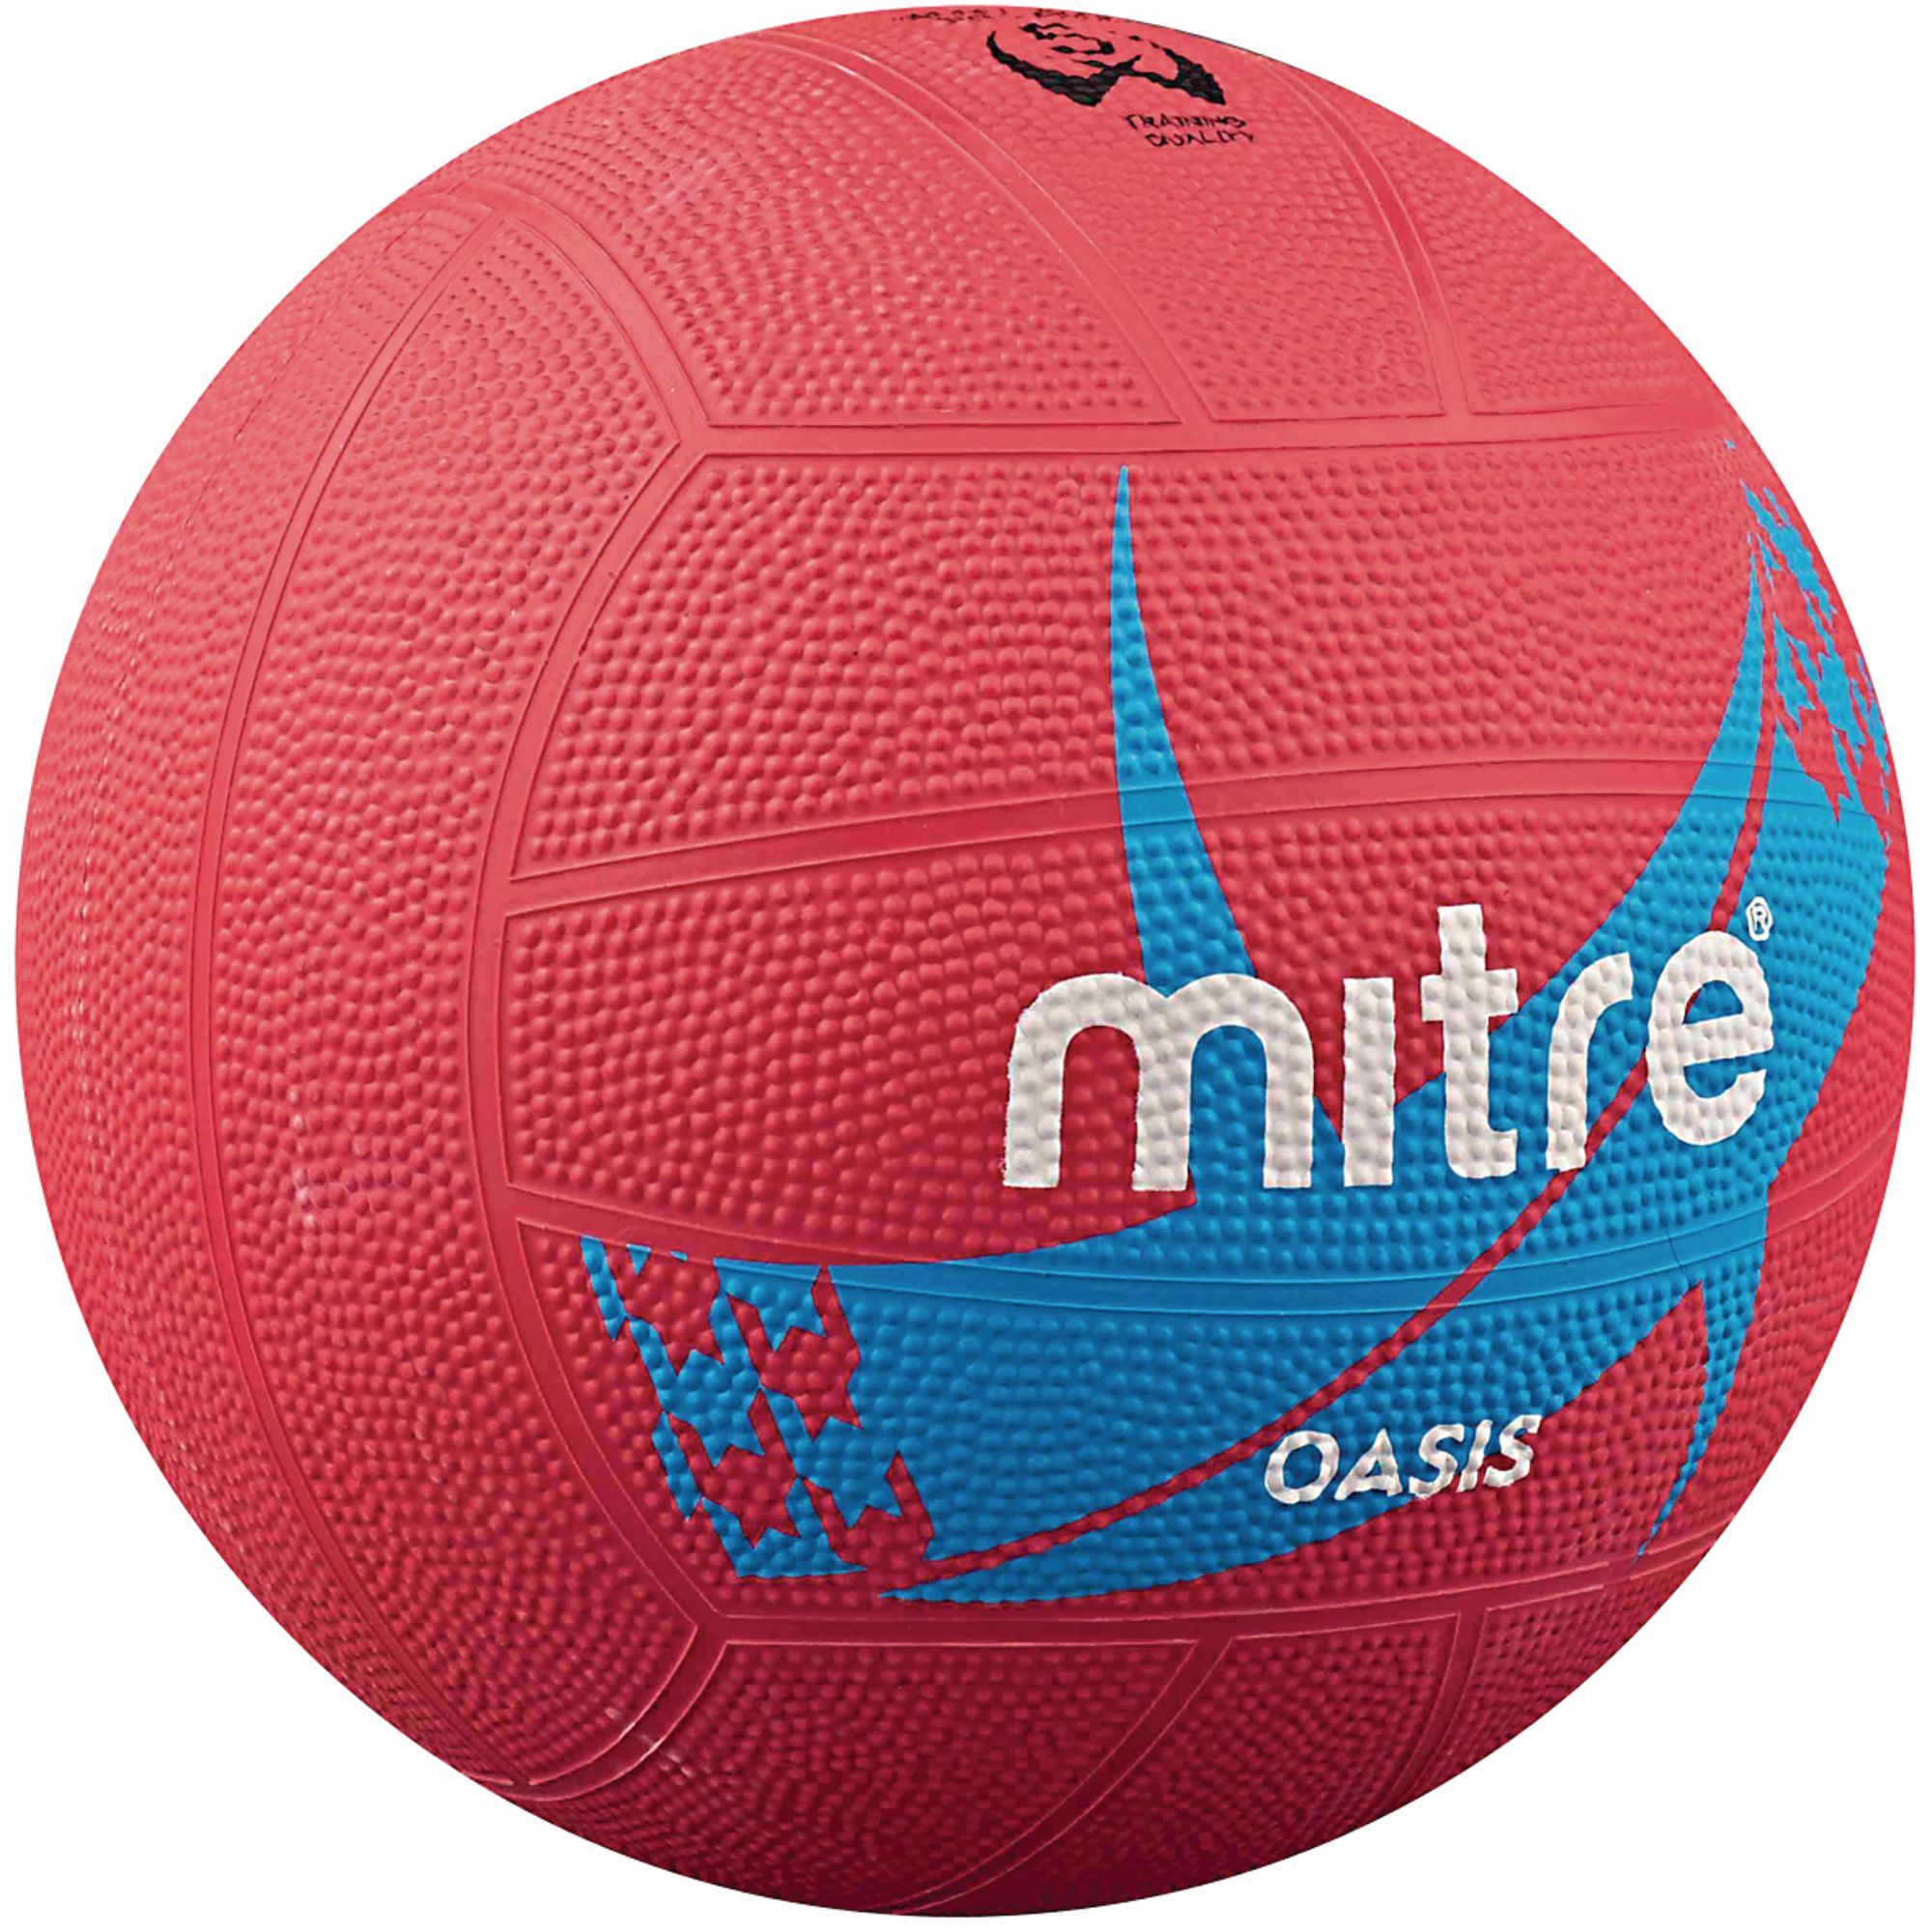 ultraball or netball